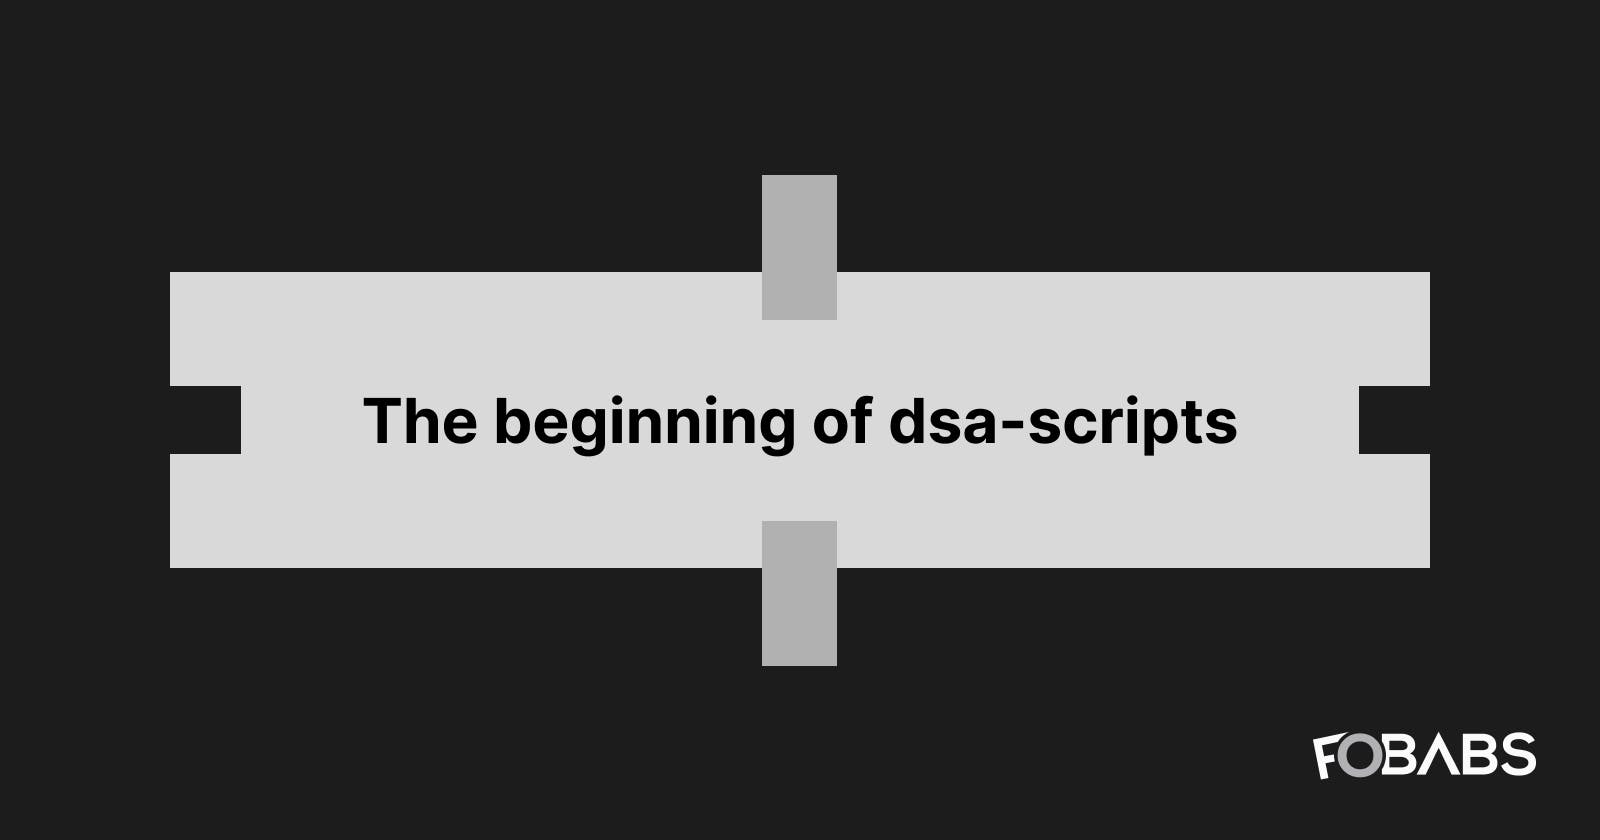 The beginning of dsa-scripts